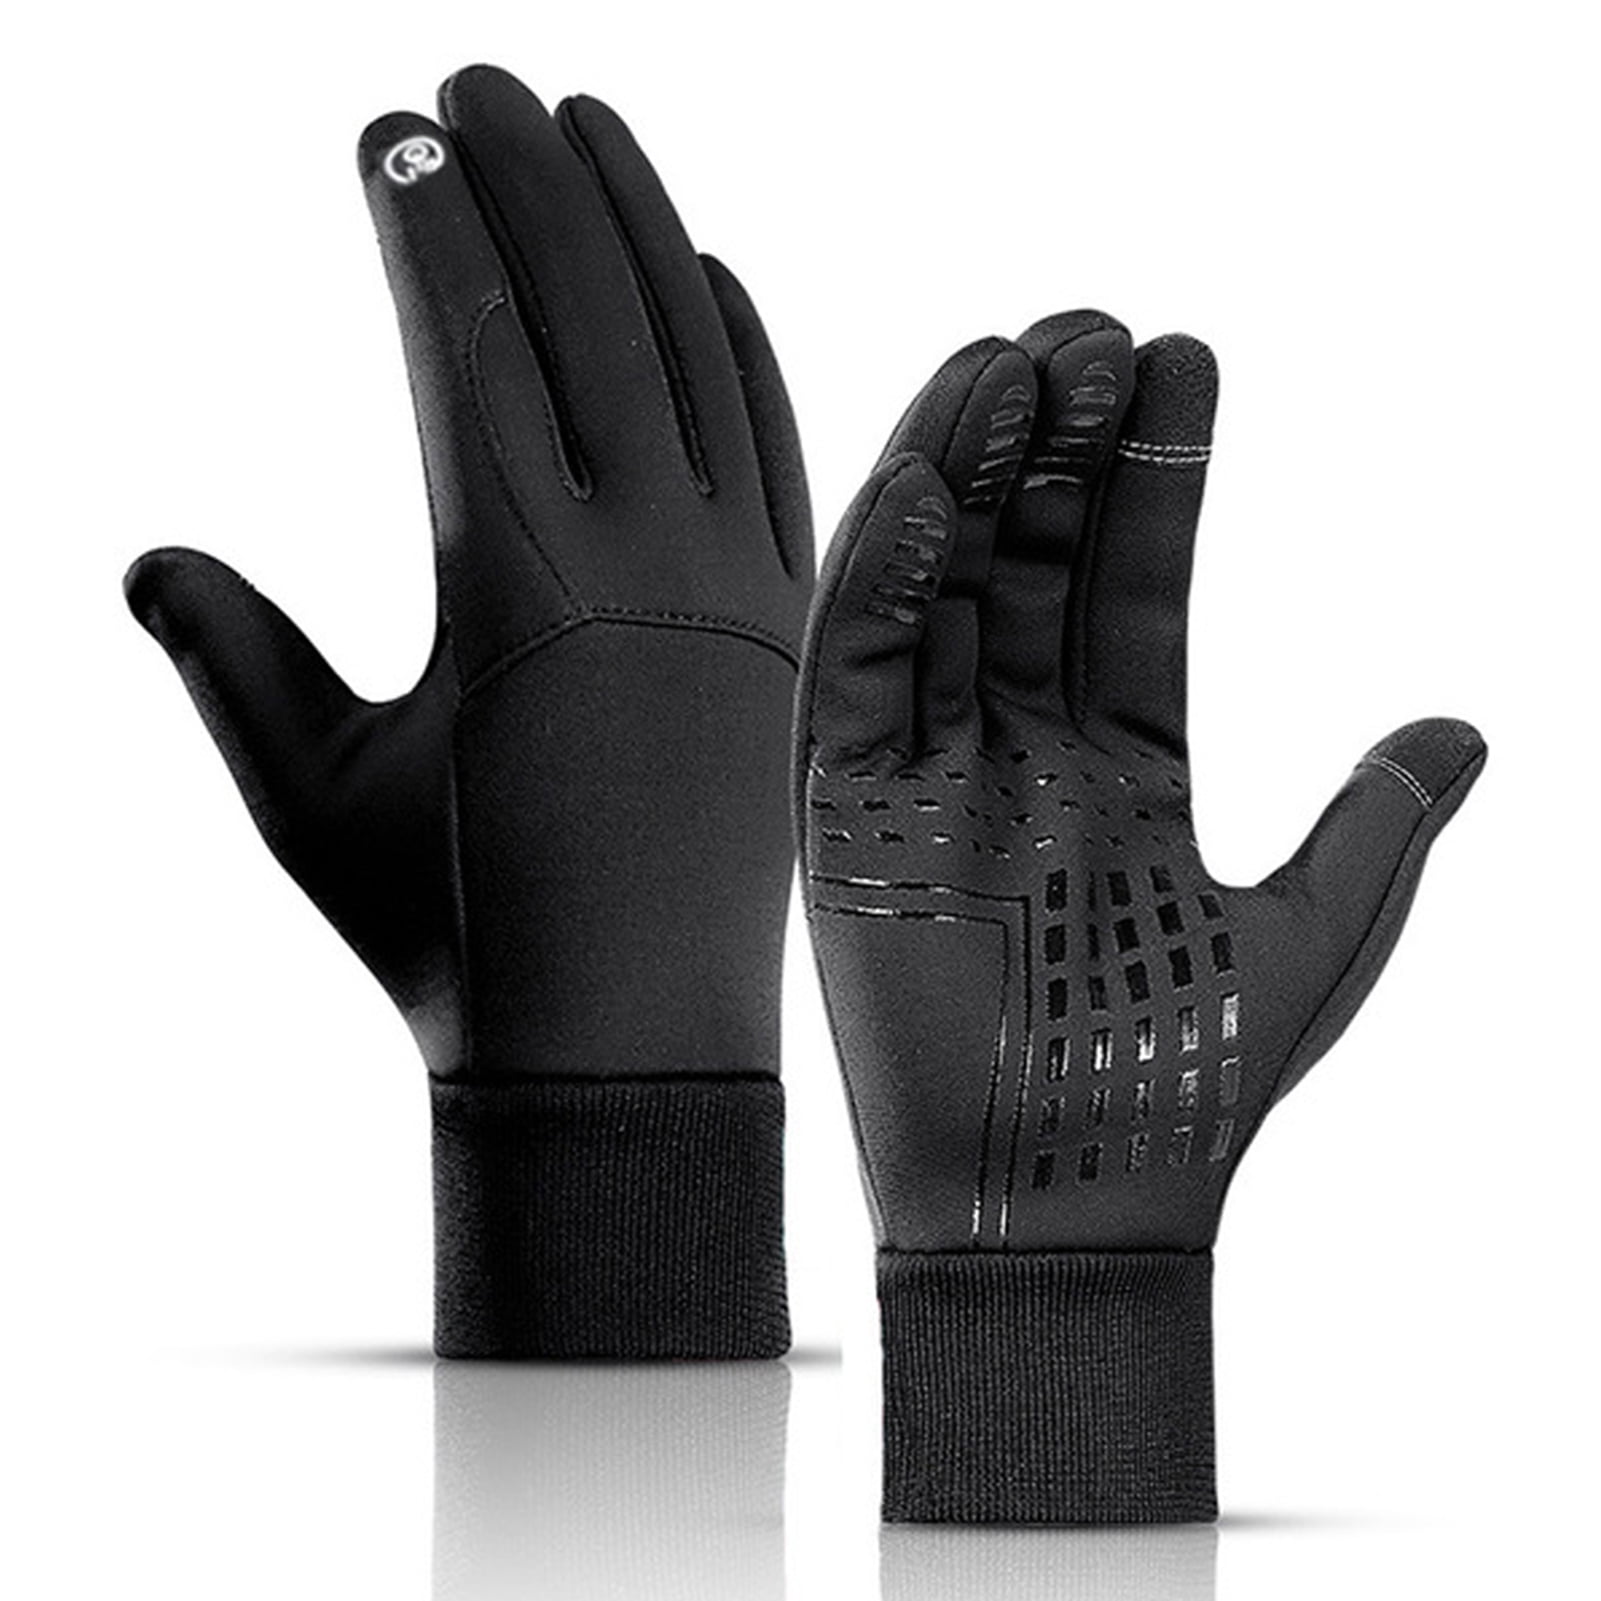 Details about   Outdoor Sports Warm Gloves Men/Women Winter Riding Full Finger Touch Screen 